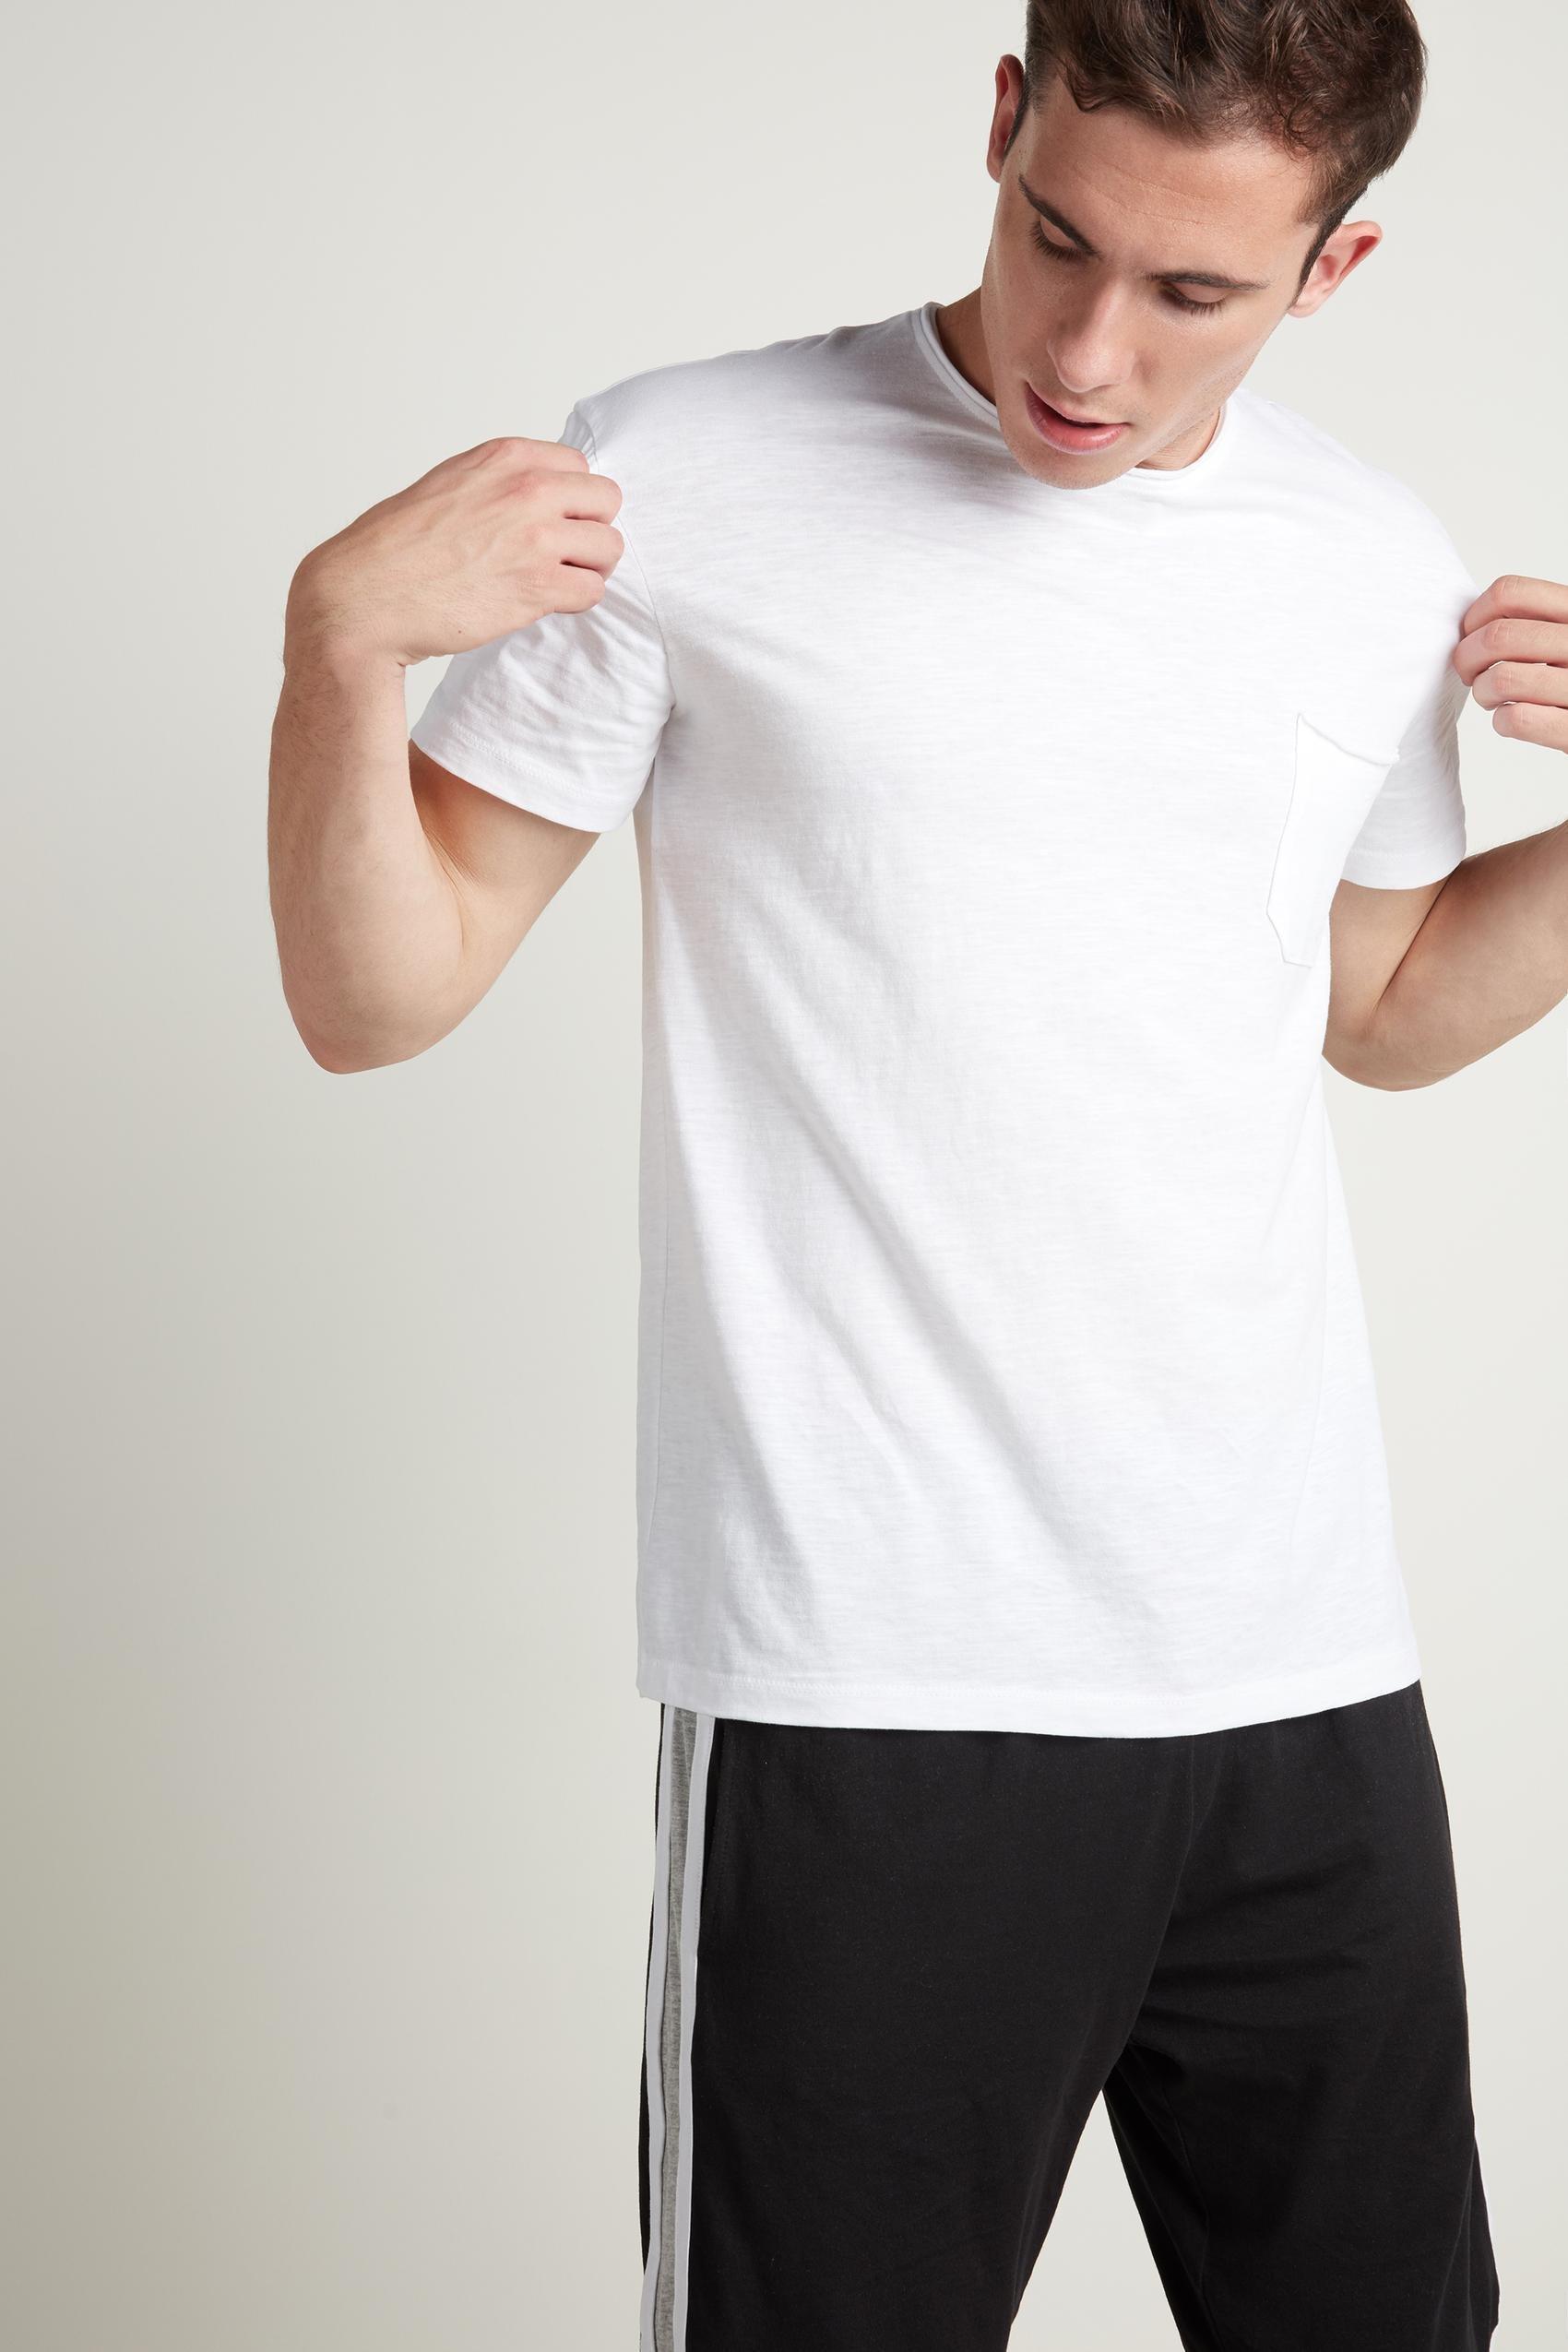 Tezenis - White Cotton Pocket T-Shirt